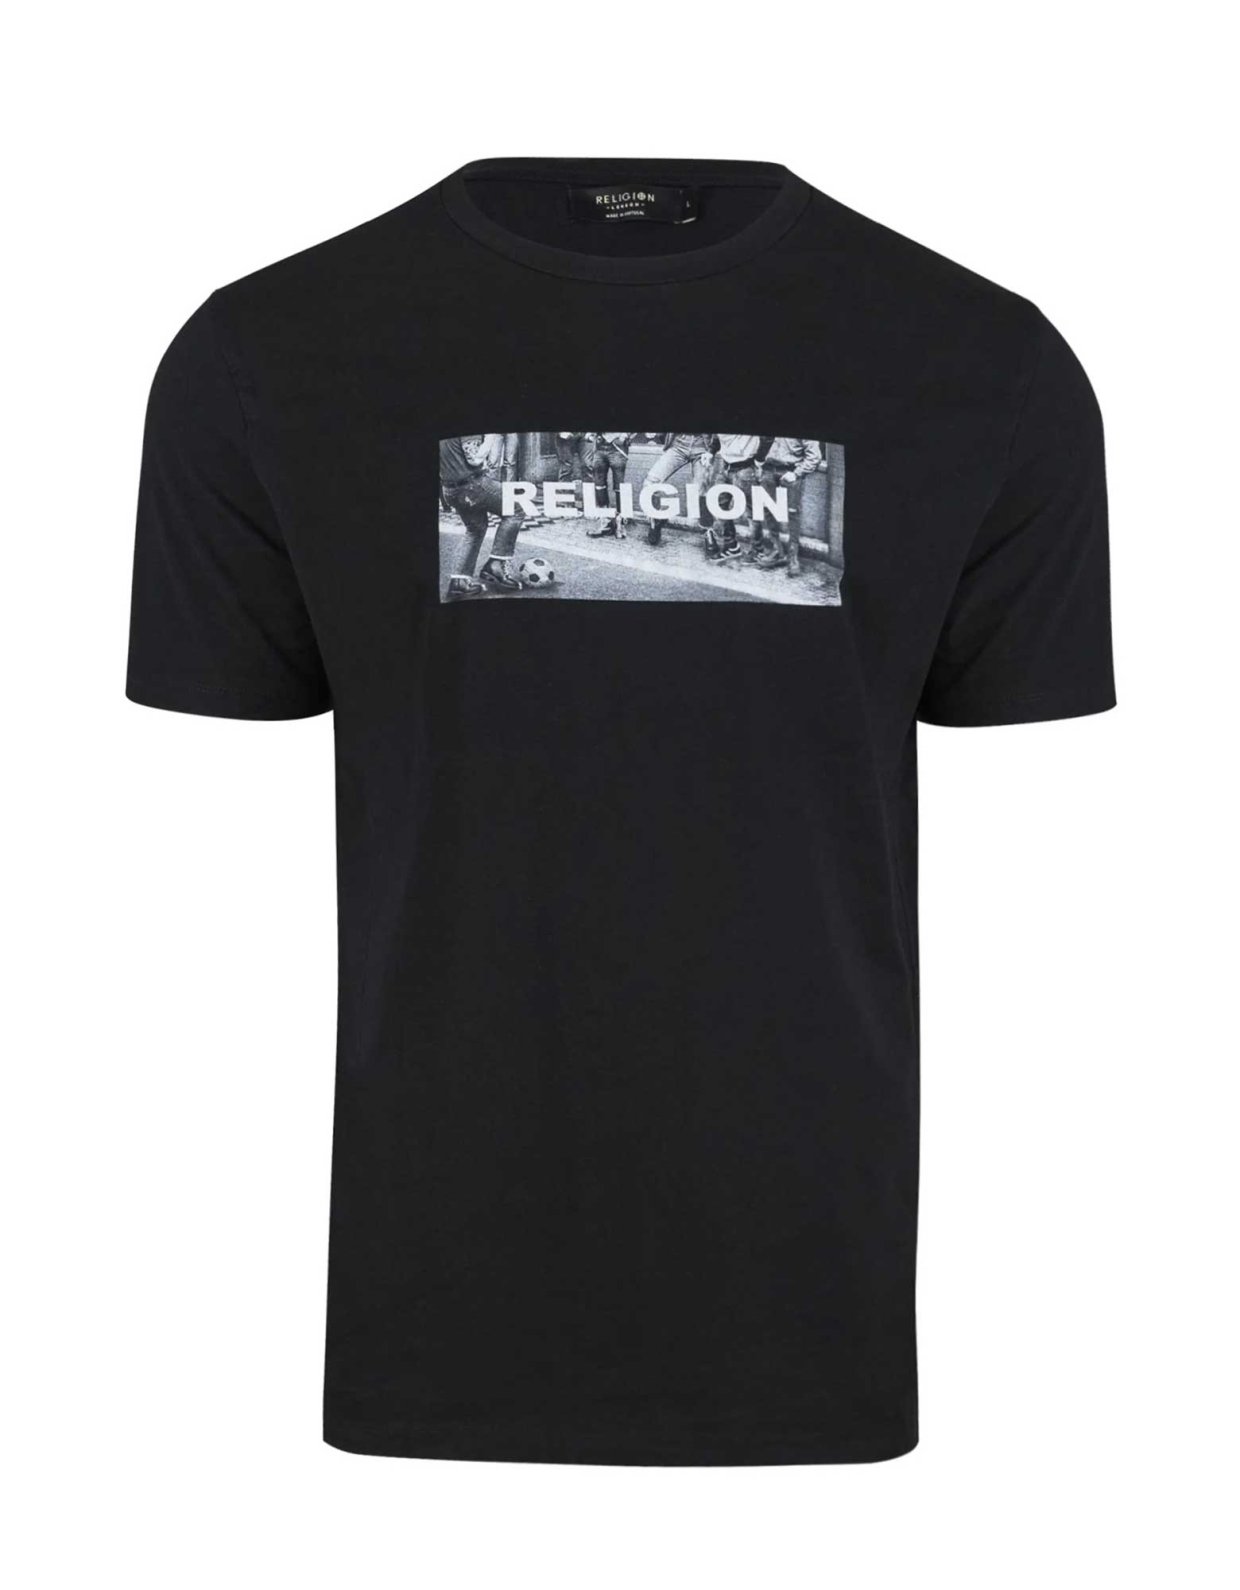 Religion Street ball t-shirt black